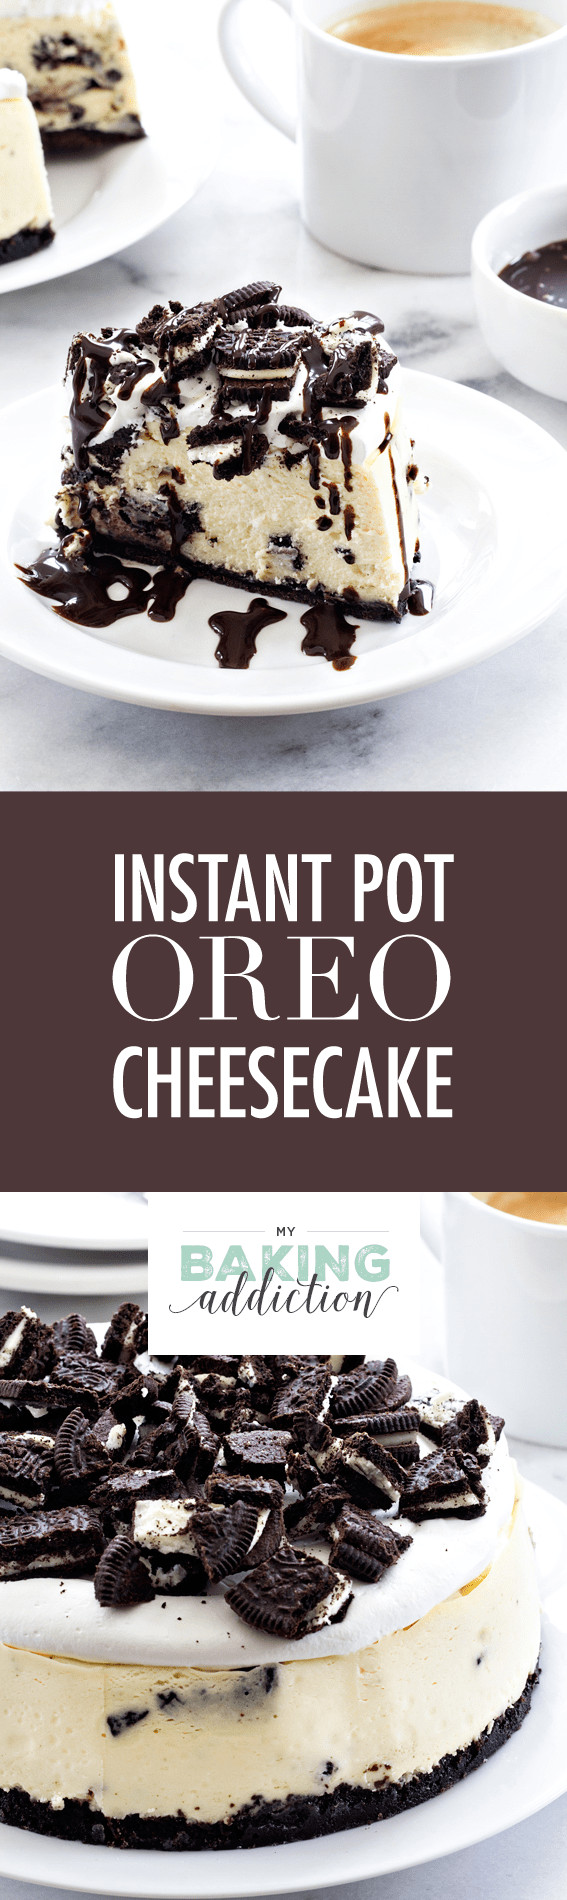 Instant Pot Cheesecake Recipe
 Instant Pot Oreo Cheesecake My Baking Addiction